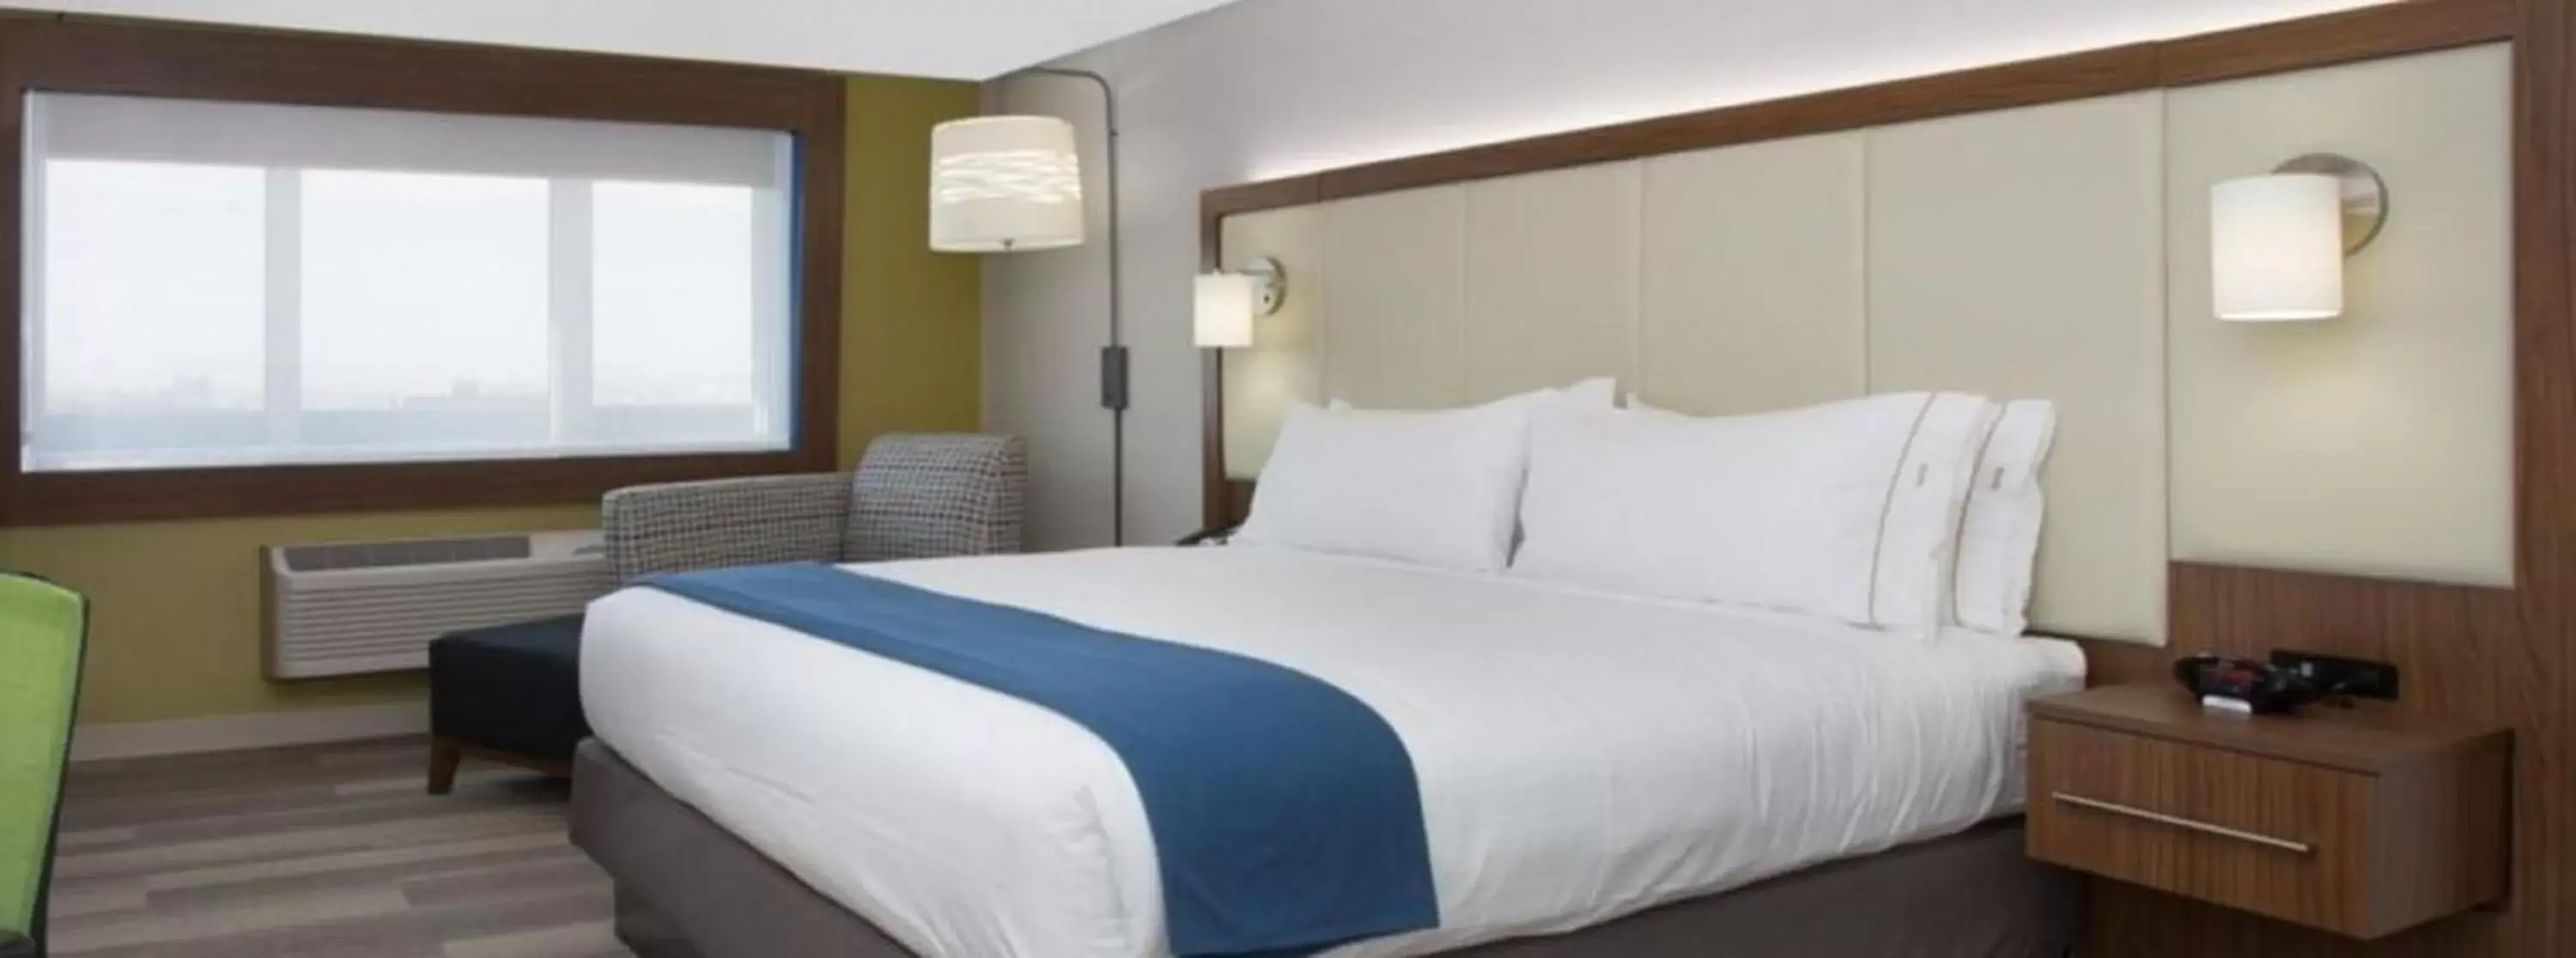 Bed in Holiday Inn Express & Suites Dallas NE Arboretum